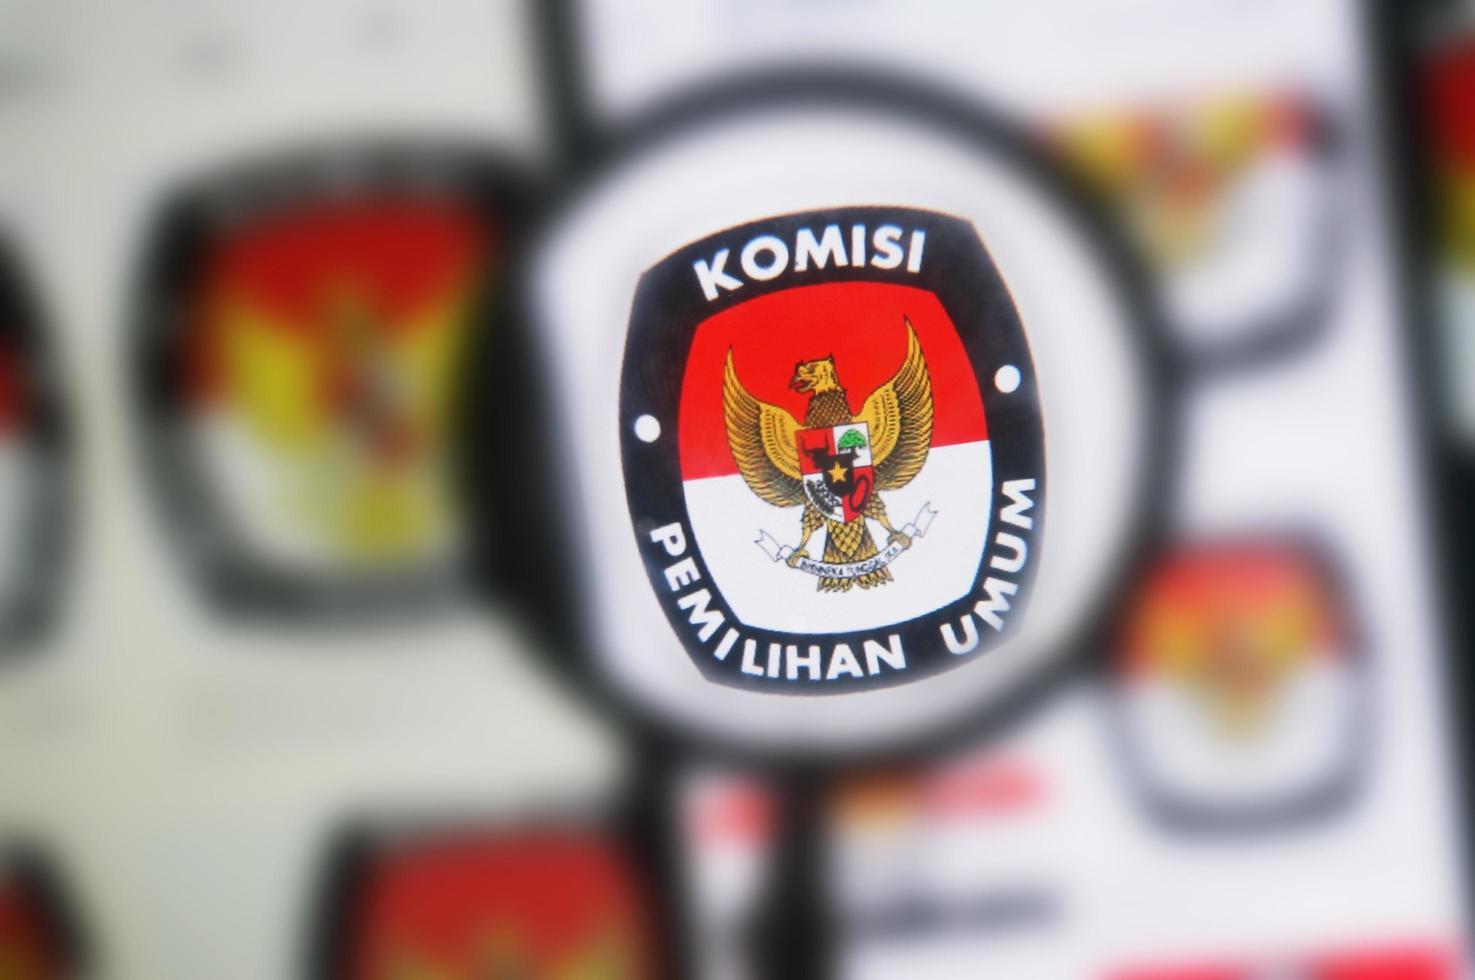 Sangatta, East Kalimantan, Indonesia, 2020 - KPU Komisi pemilihan umum or General Elections Commission Logo under magnifying glass with selective focus photo